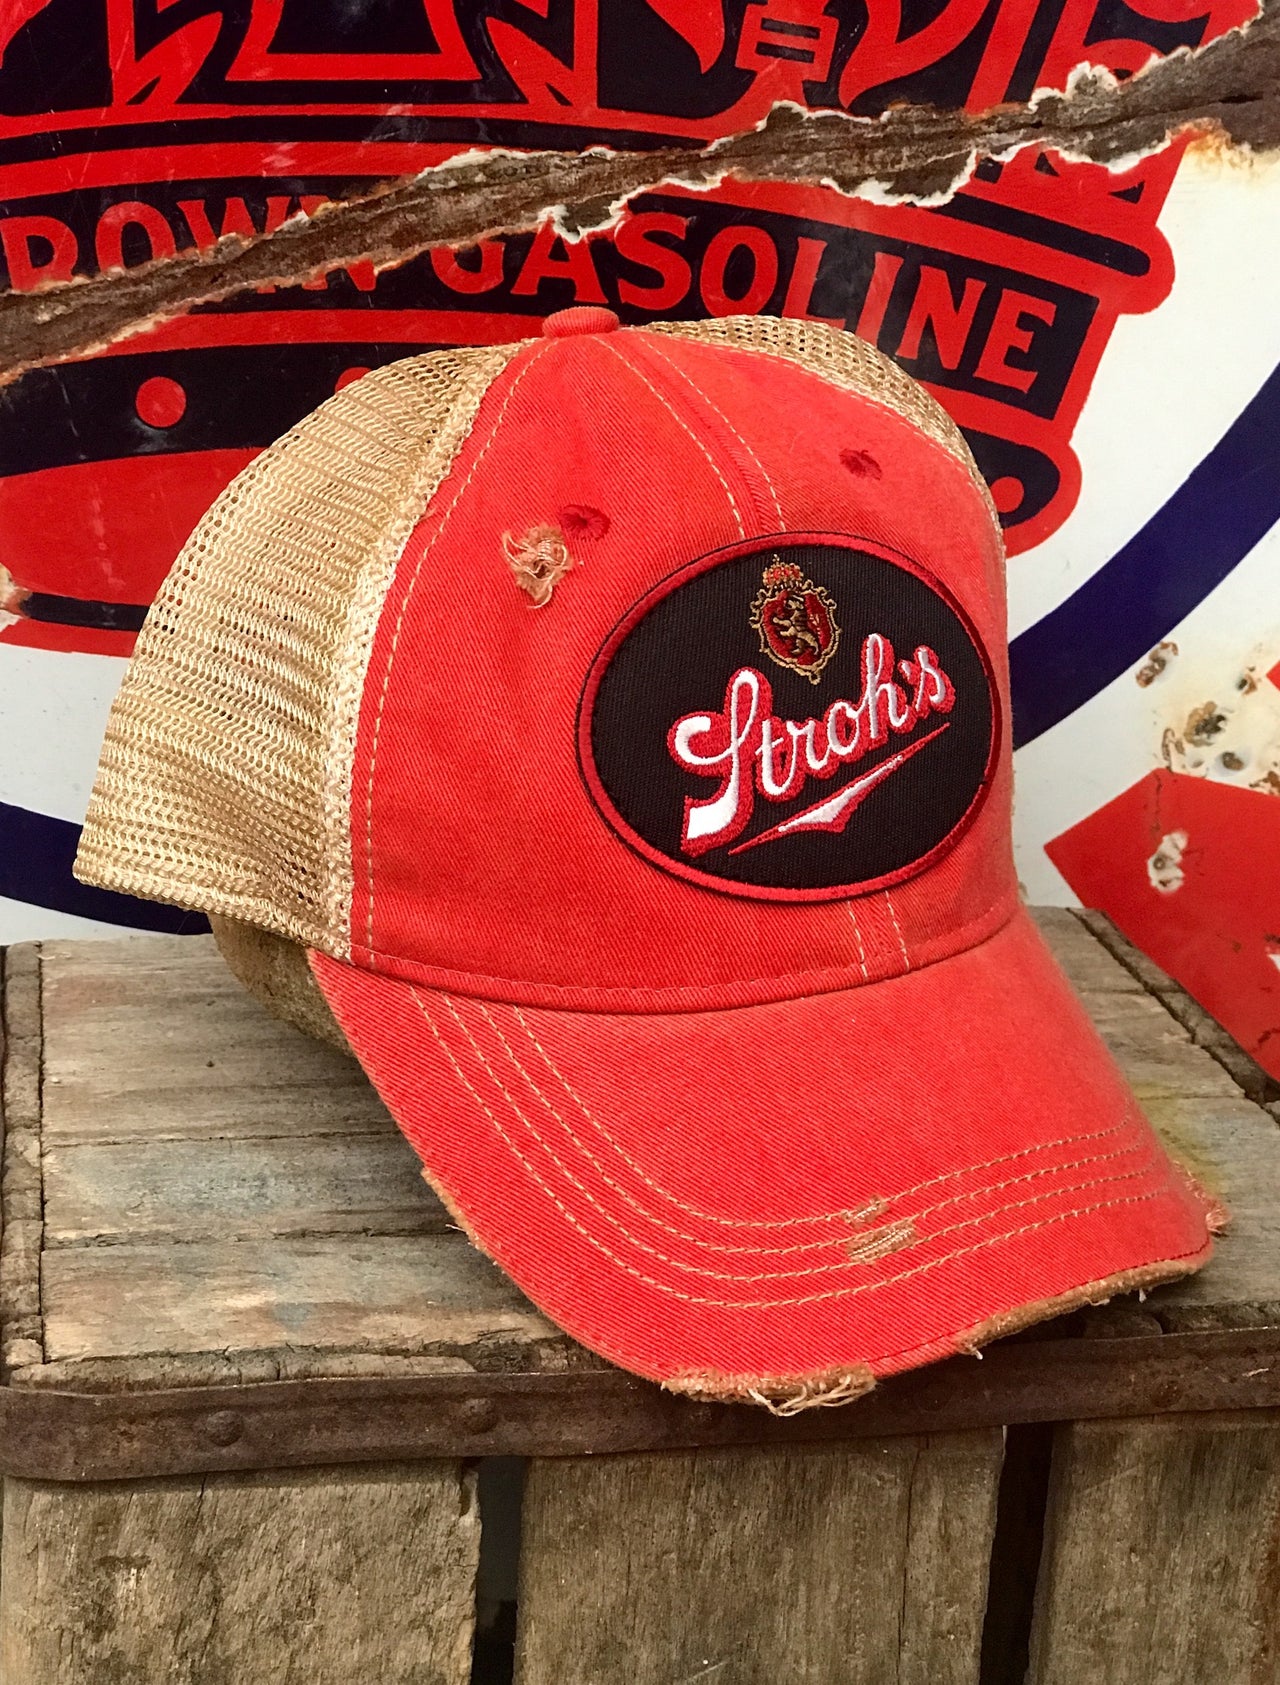 Stroh's Beer Vintage Logo Patch Hat - Distressed Red Snapback